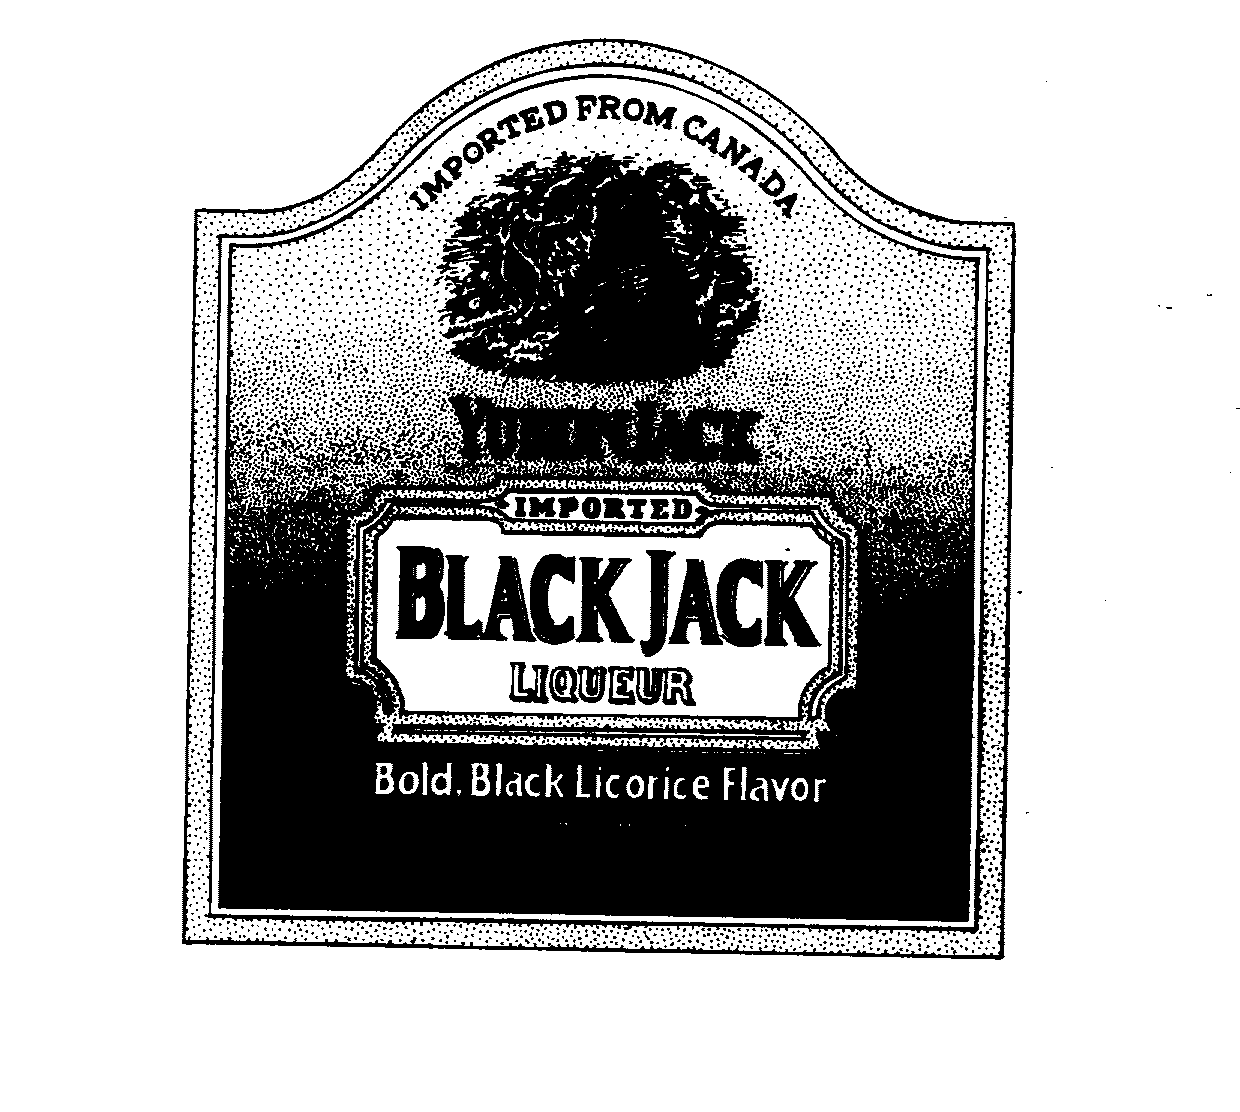  YUKON JACK BLACK JACK LIQUEUR IMPORTED FROM CANADA IMPORTED BOLD, BLACK LICORICE FLAVOR